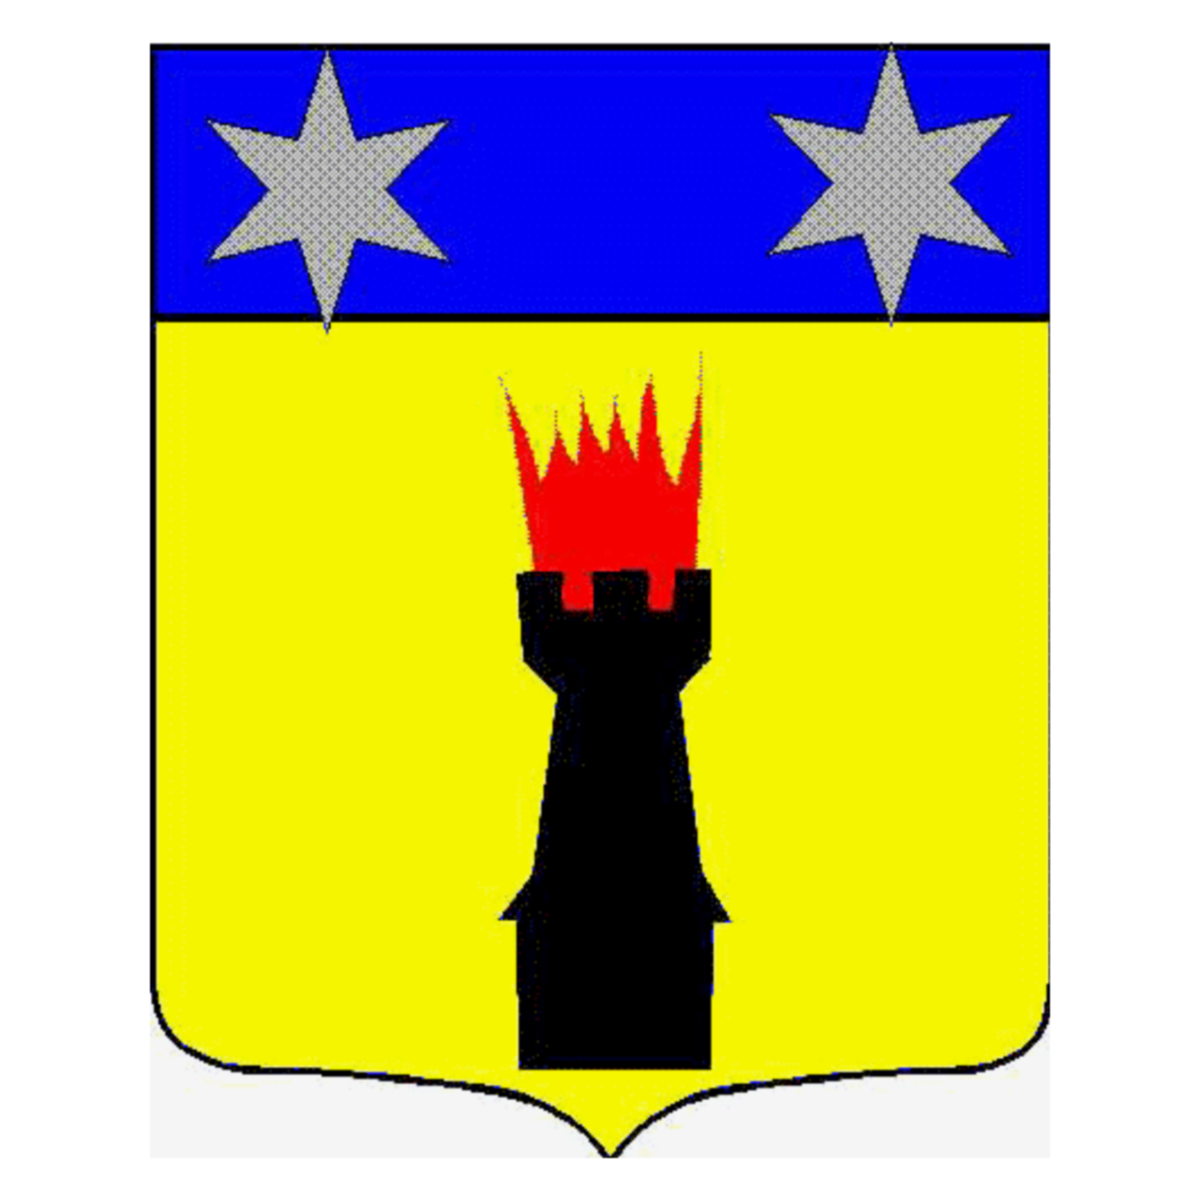 Wappen der Familie Gosse